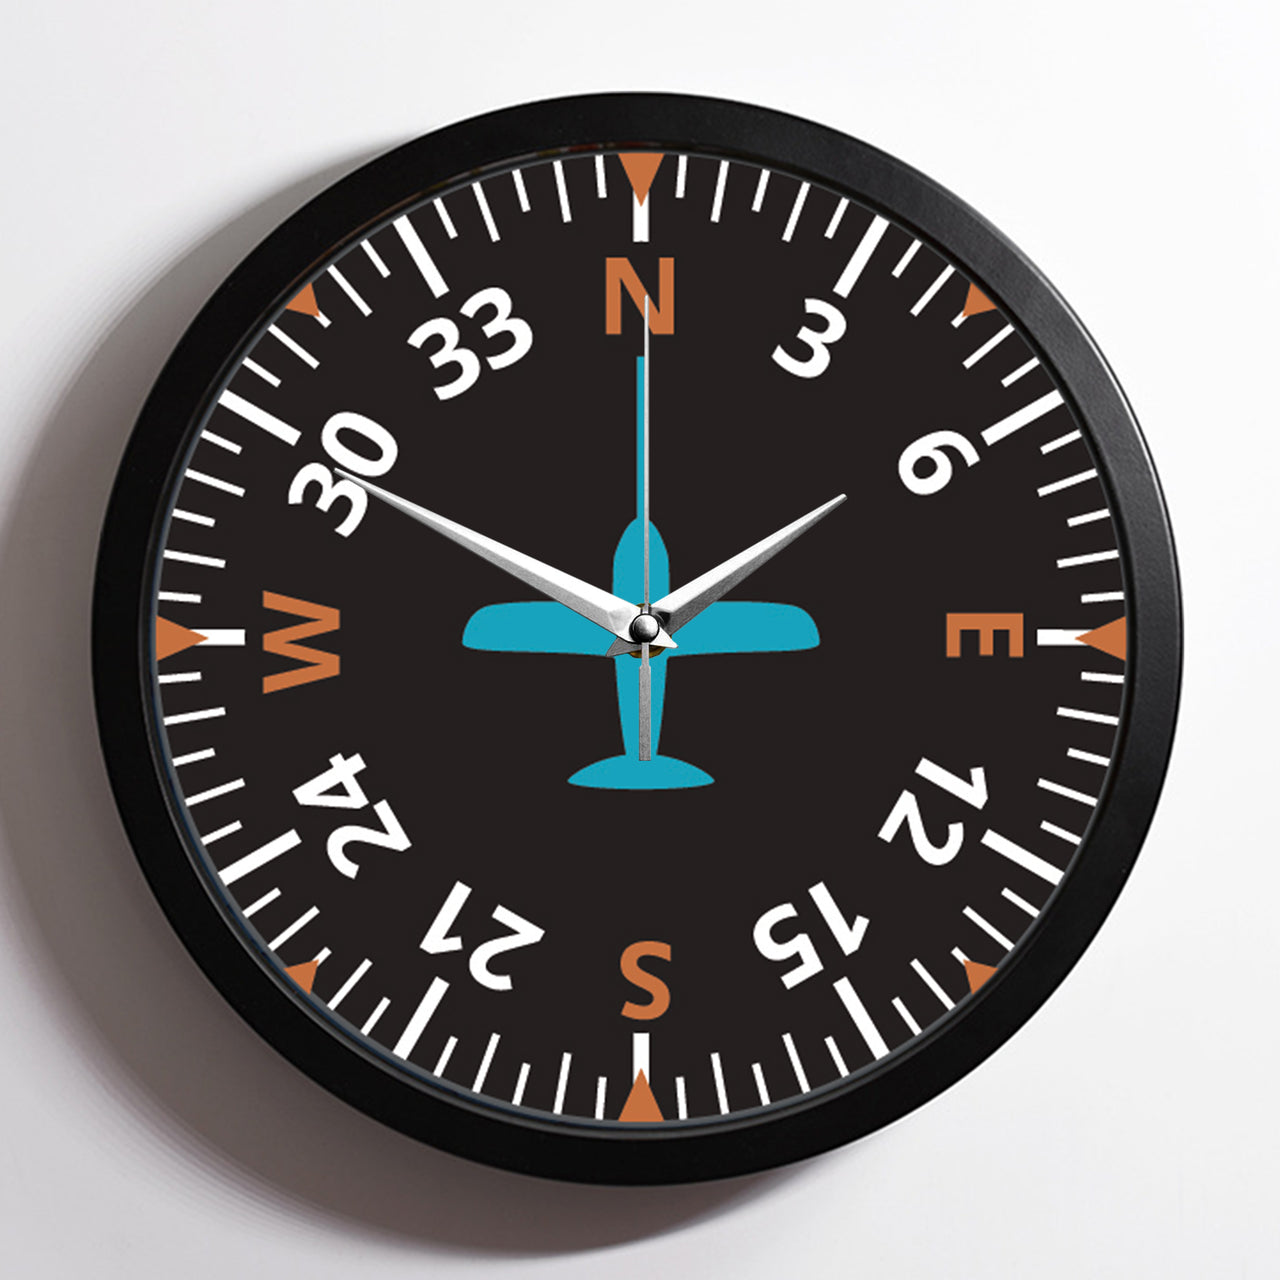 Airplane Instruments (Heading) 2 Designed Wall Clocks